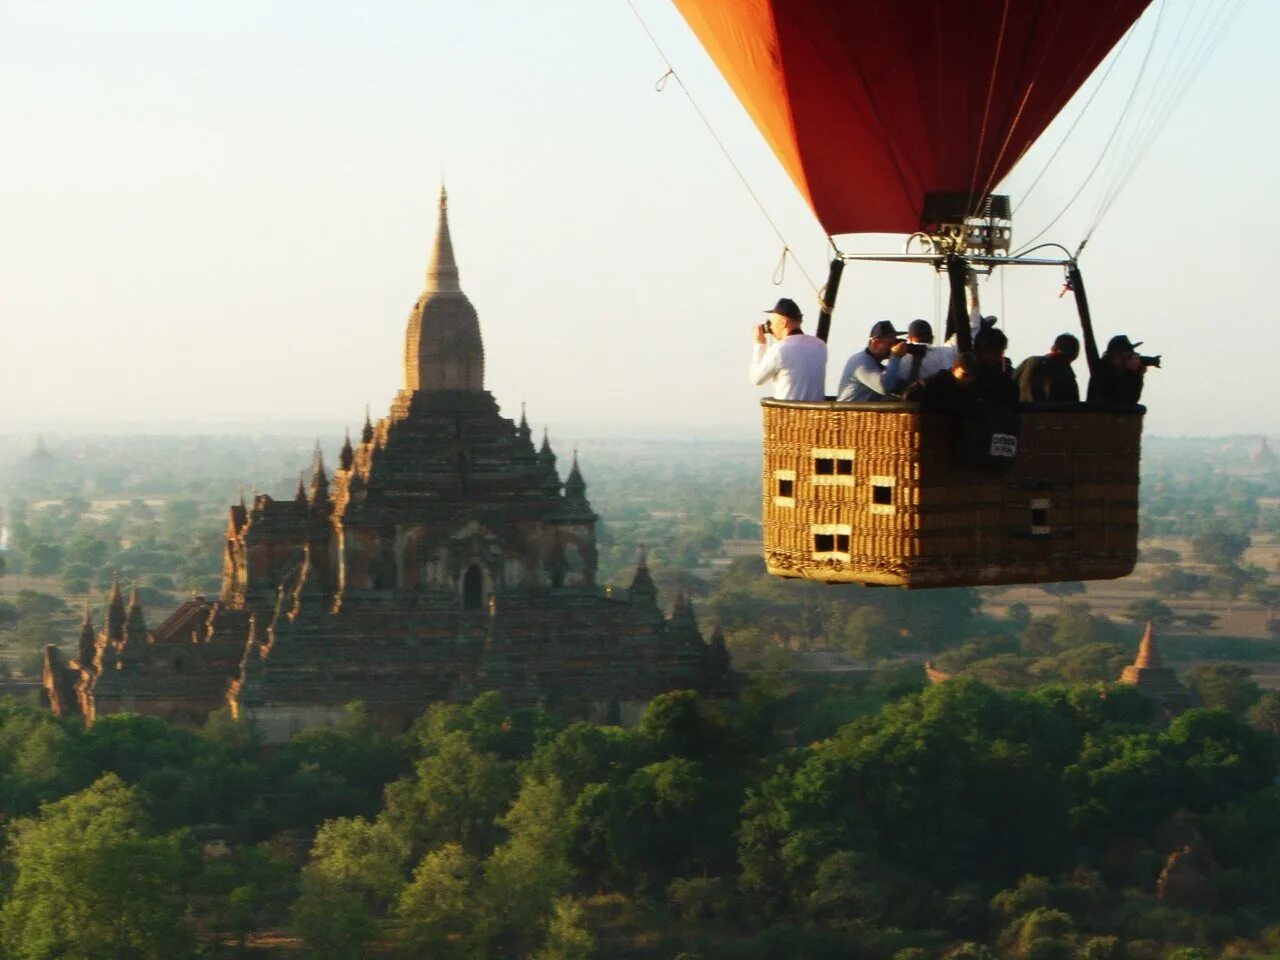 Ангкор ват на воздушном шаре. Путешествие на воздушном шаре. Воздушный шар путешествие. Воздушное путешествие.